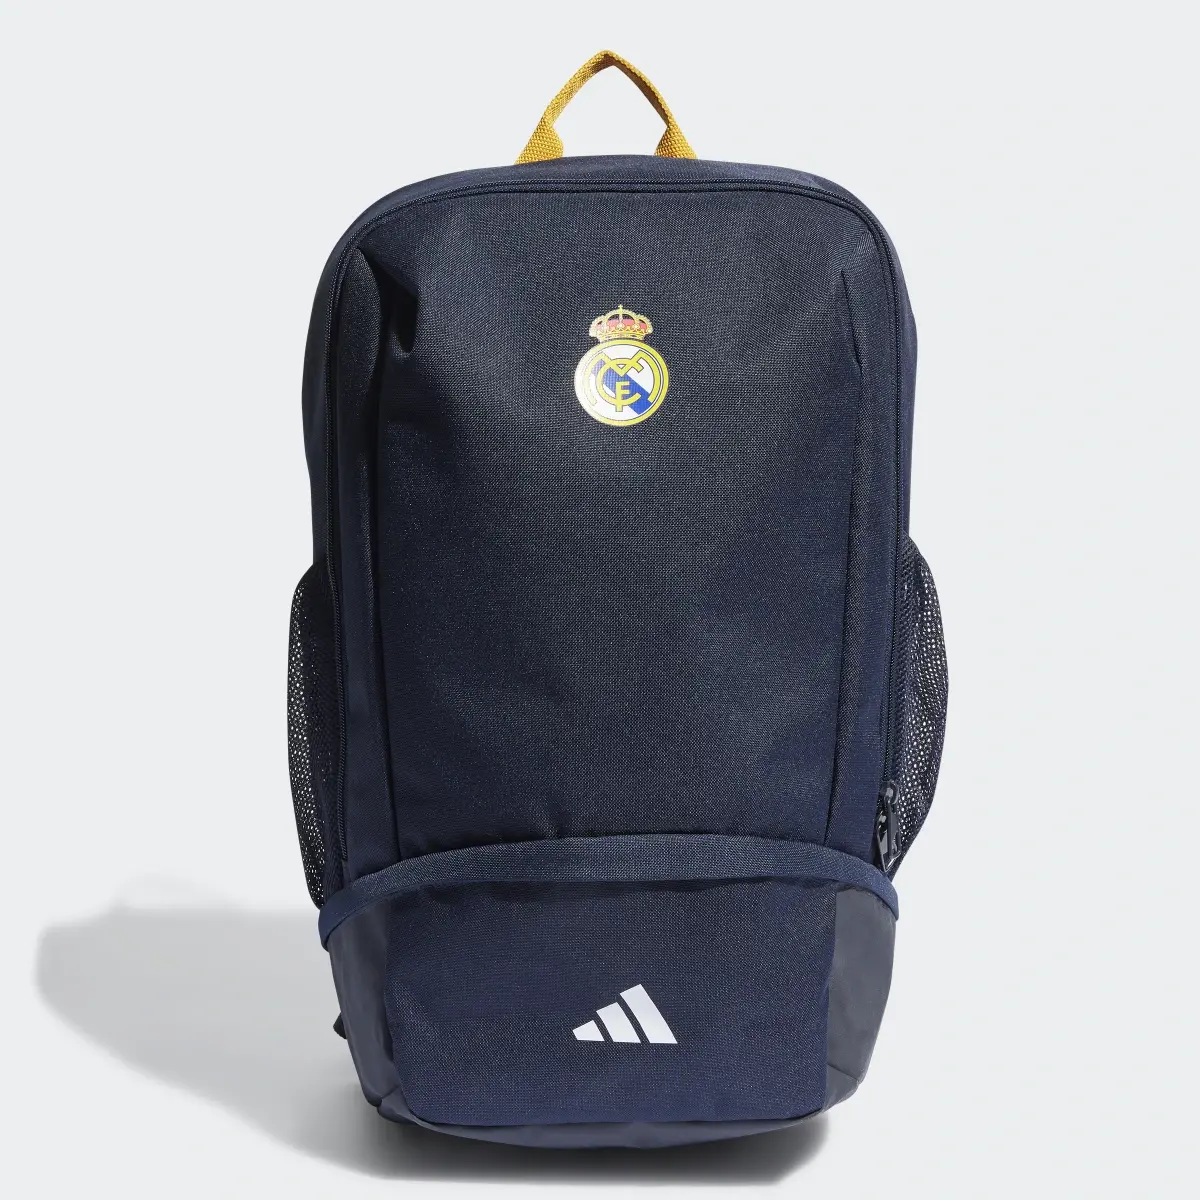 Adidas Real Madrid Backpack. 2